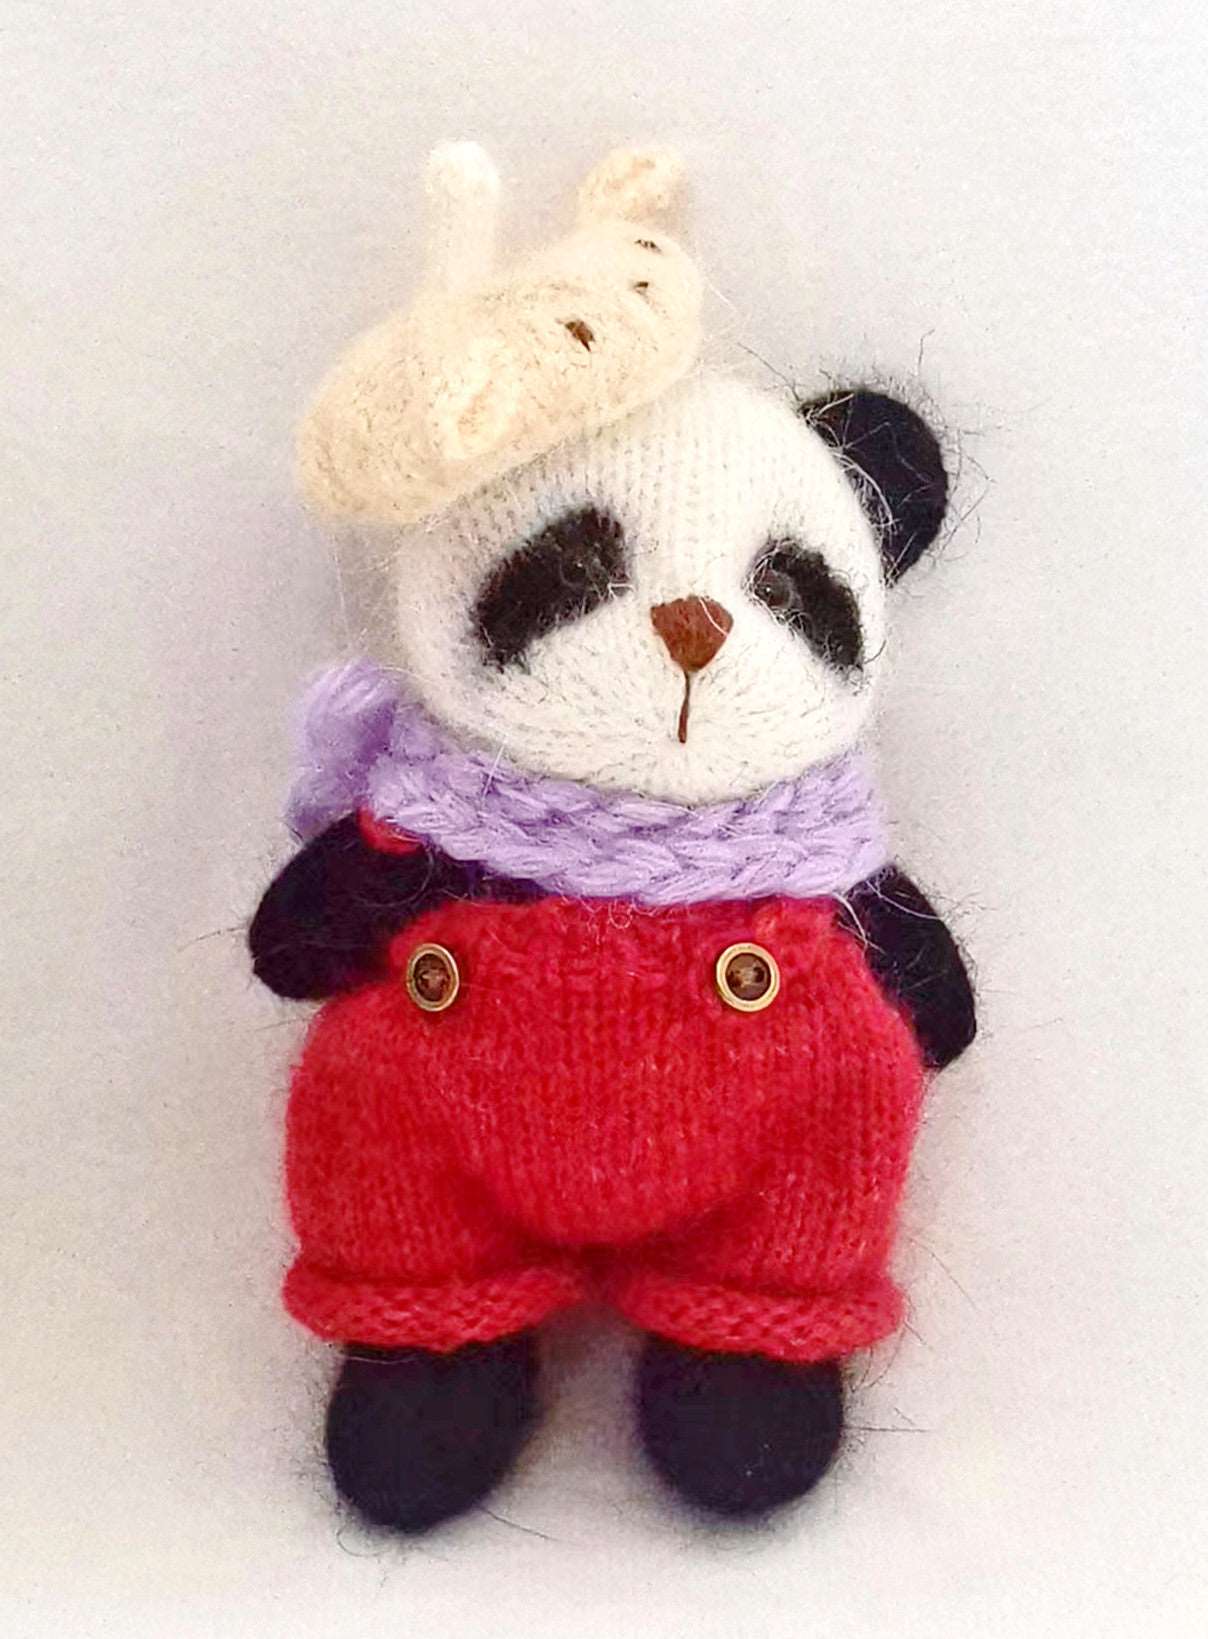 Handmade Crochet Panda Toy for Wildlife Enthusiasts